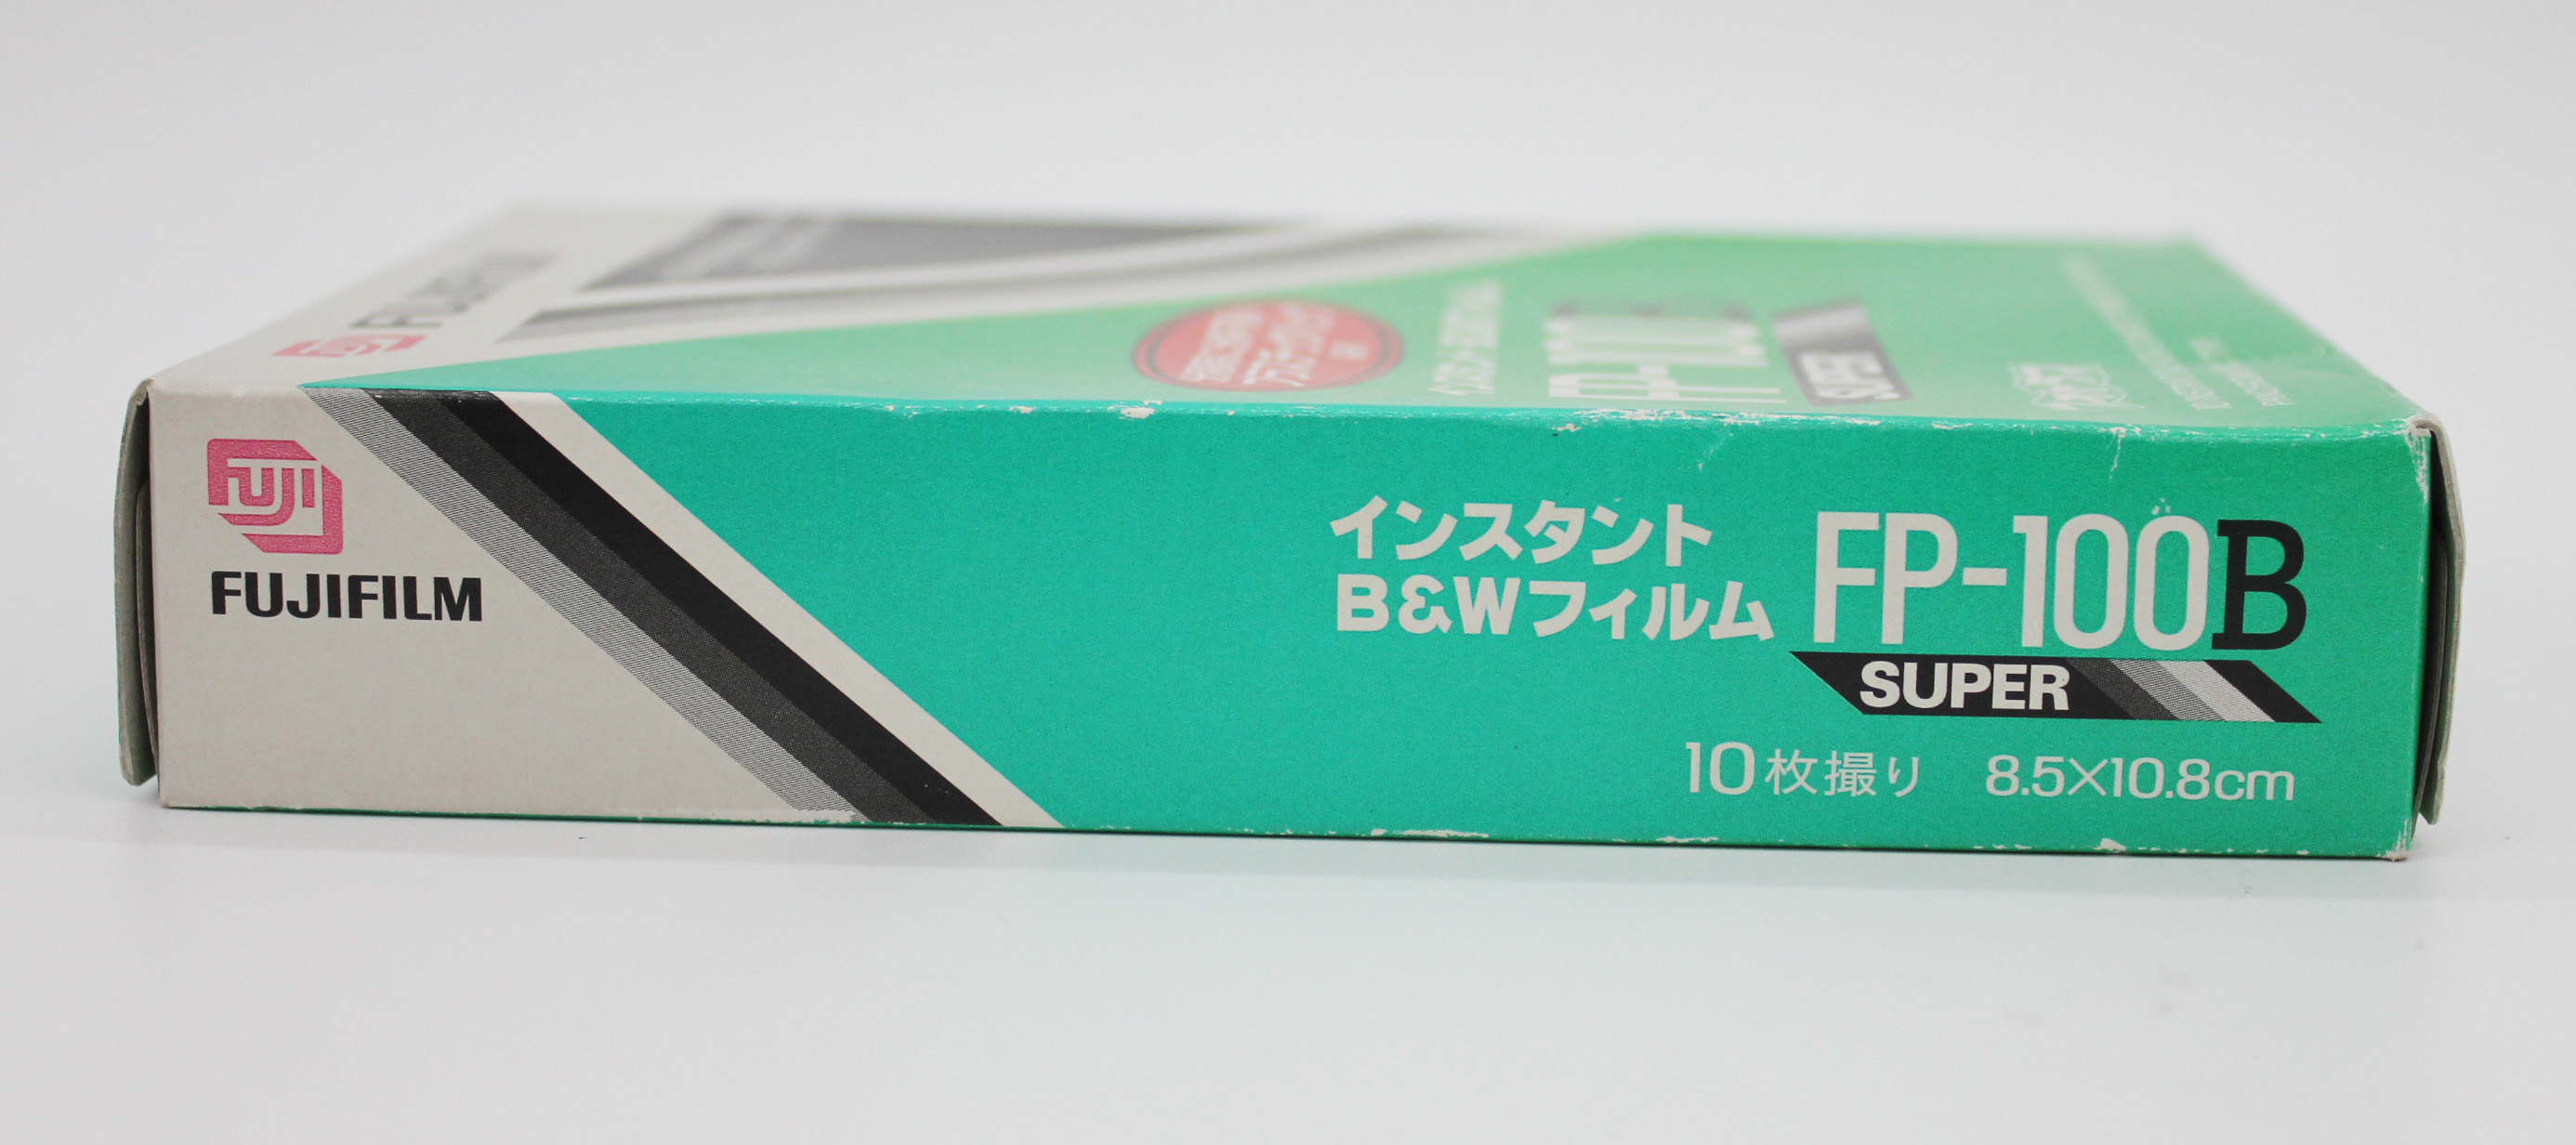  Fujifilm FP-100B Instant Black & White Film (Expired 09/2004) from Japan Photo 3